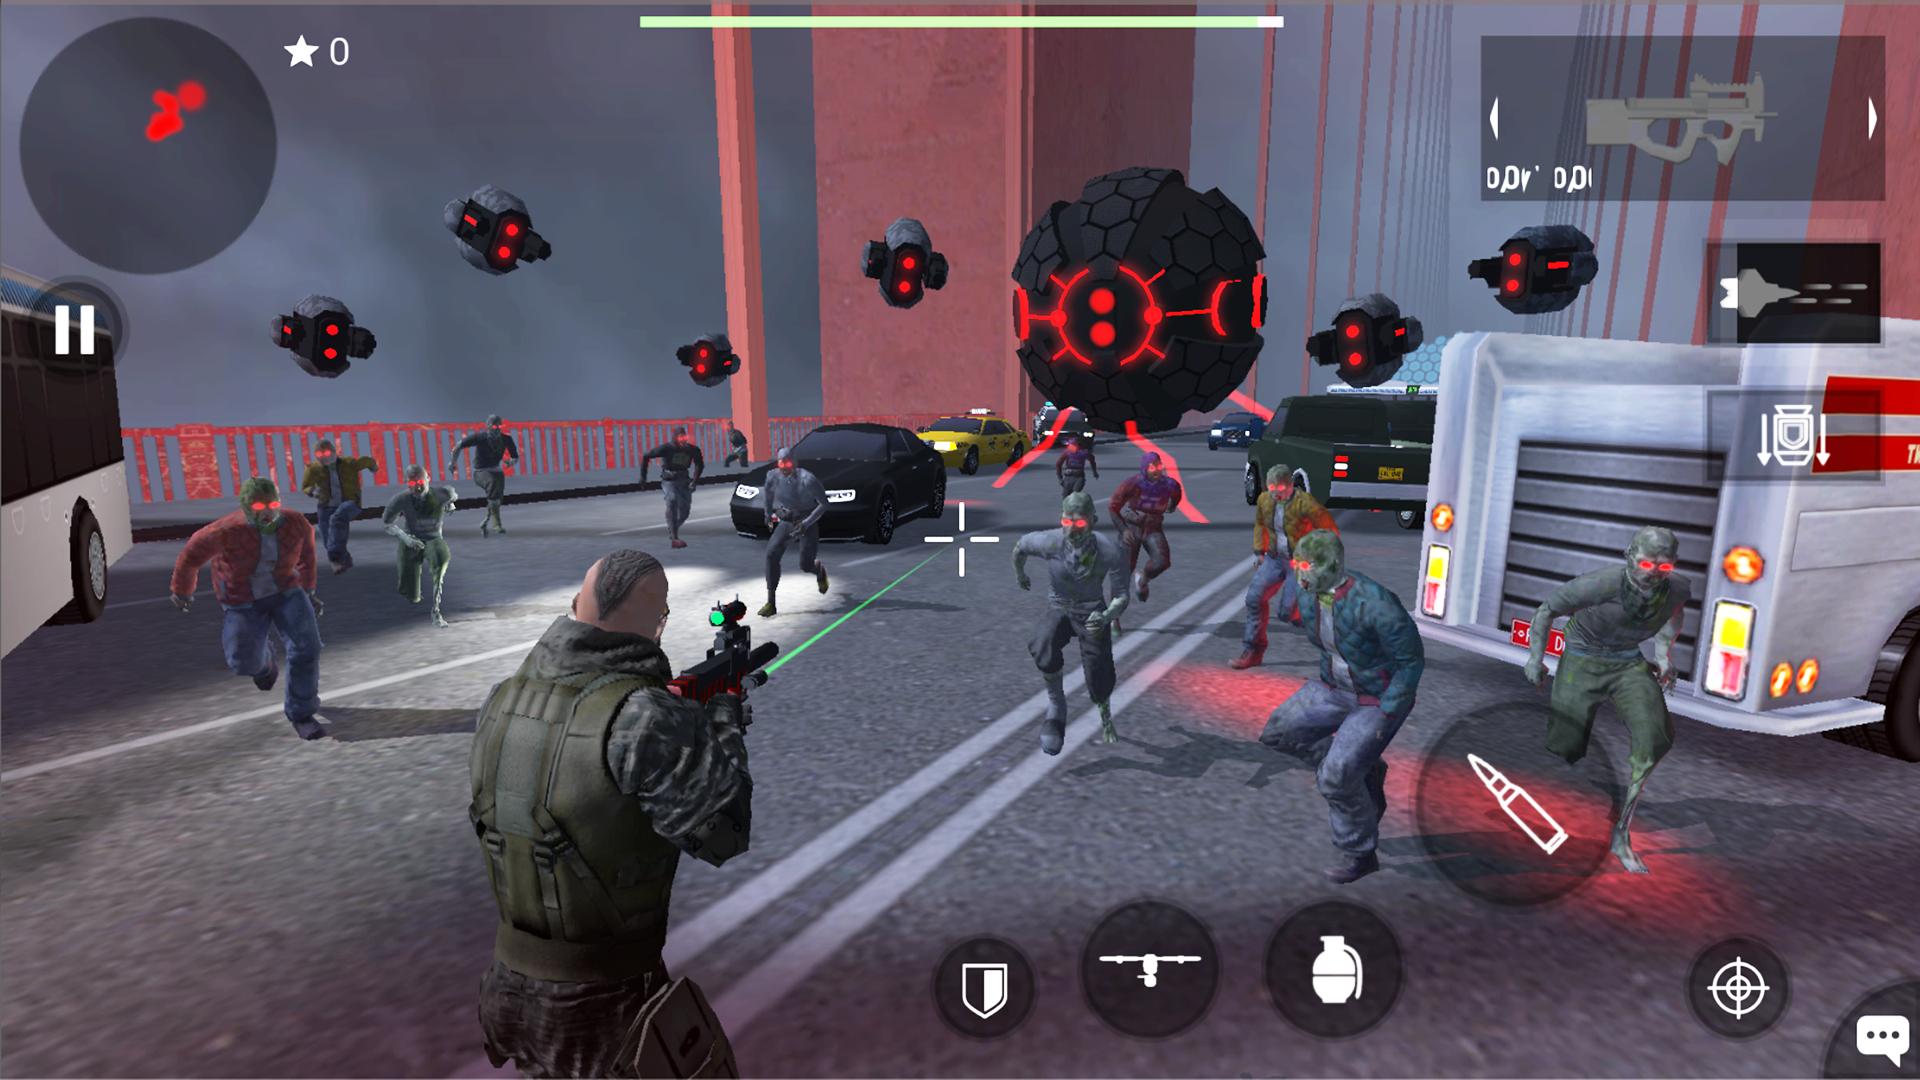 Earth Protect Squad Third Person Shooting Game 2.00.32b Screenshot 2